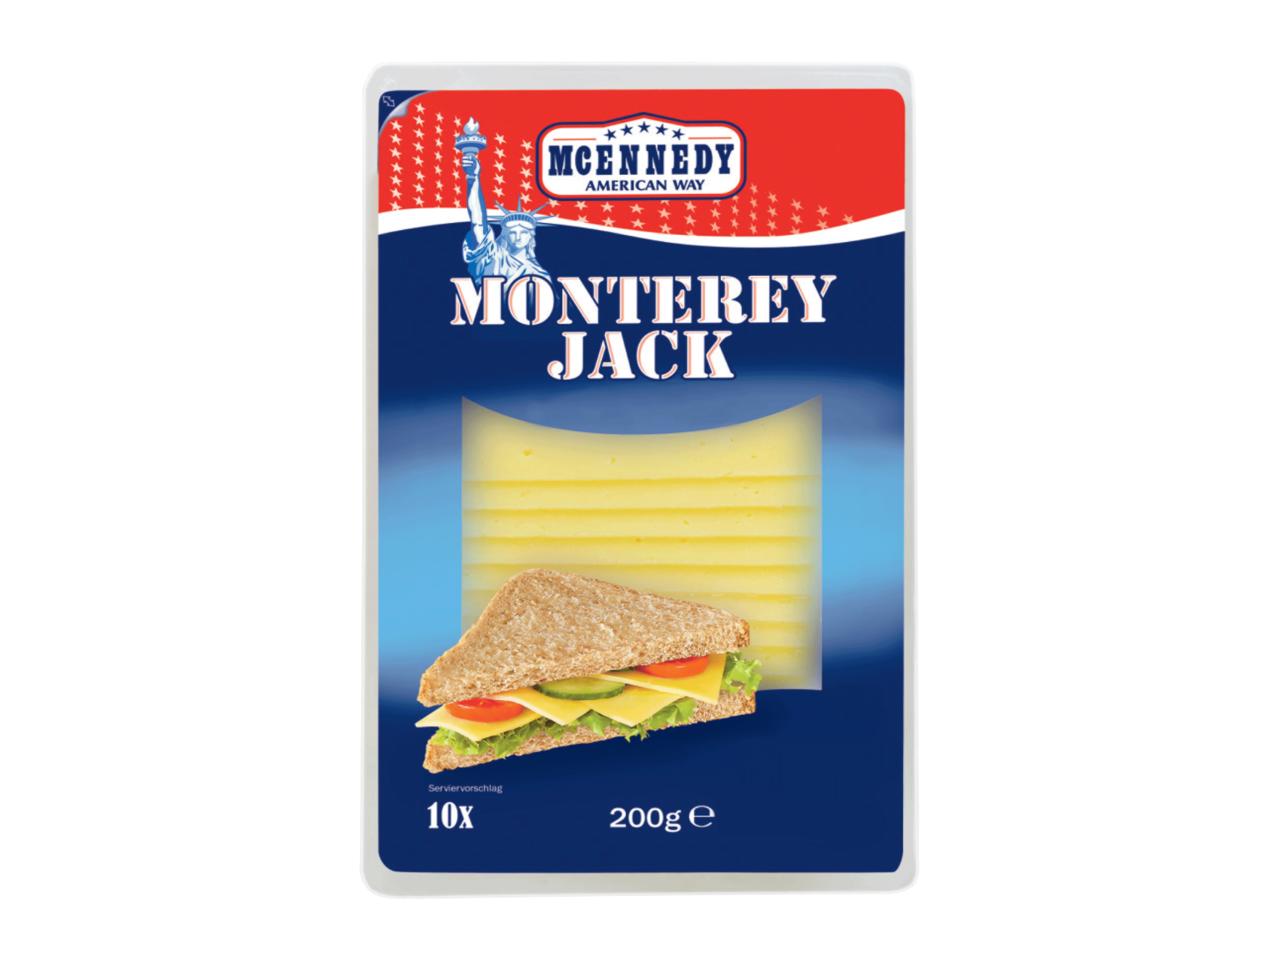 MCENNEDY Sliced Monterey Jack Cheese